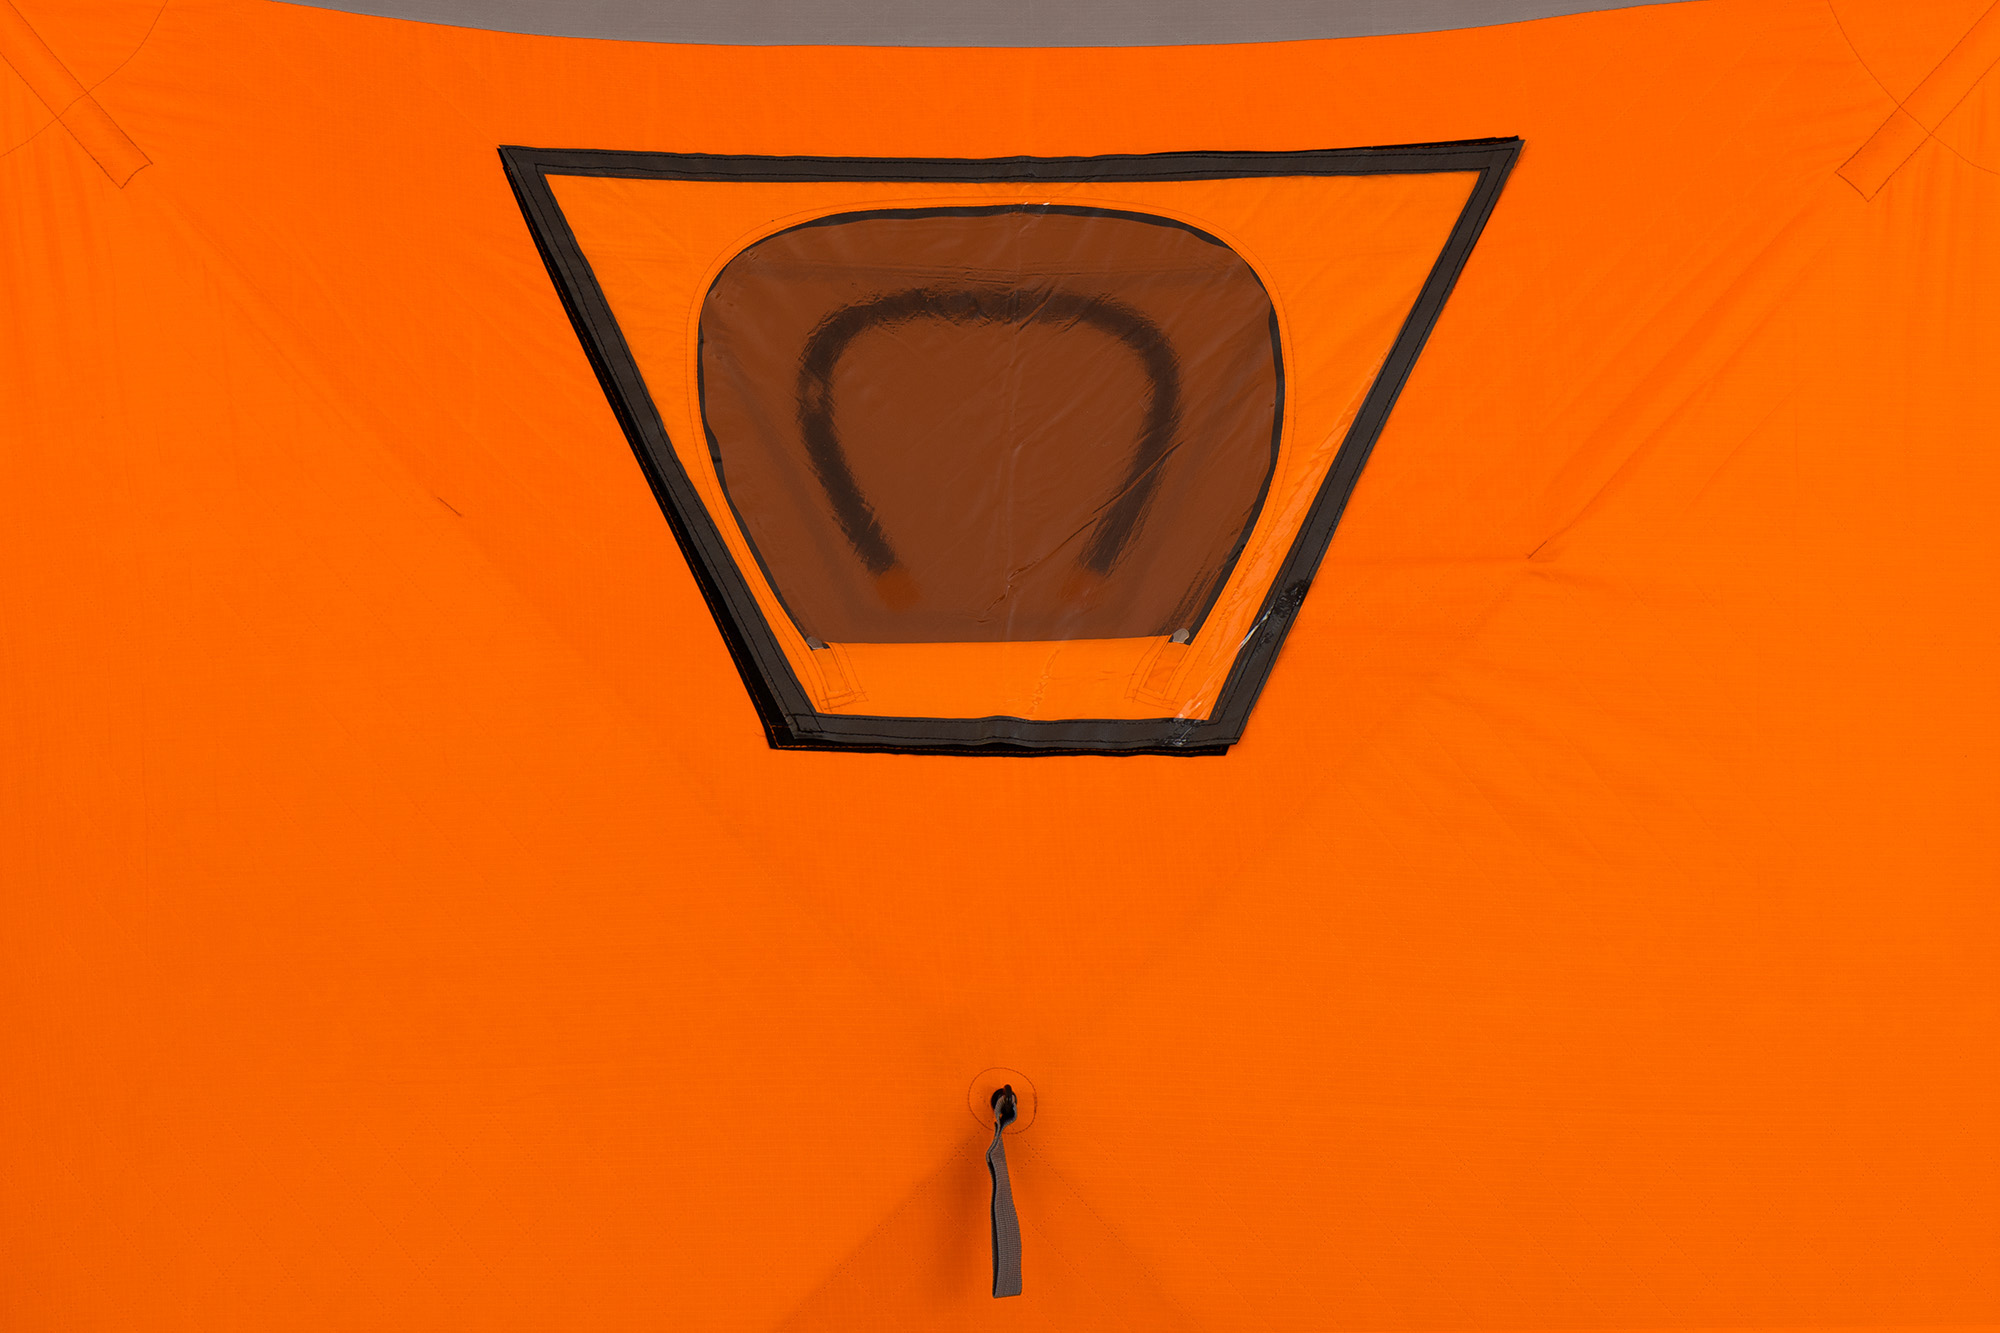 Палатка Куб "CONDOR" зимняя утепленная 6 сторон, 3,6 х 3,2 х 2,2  оранжевый